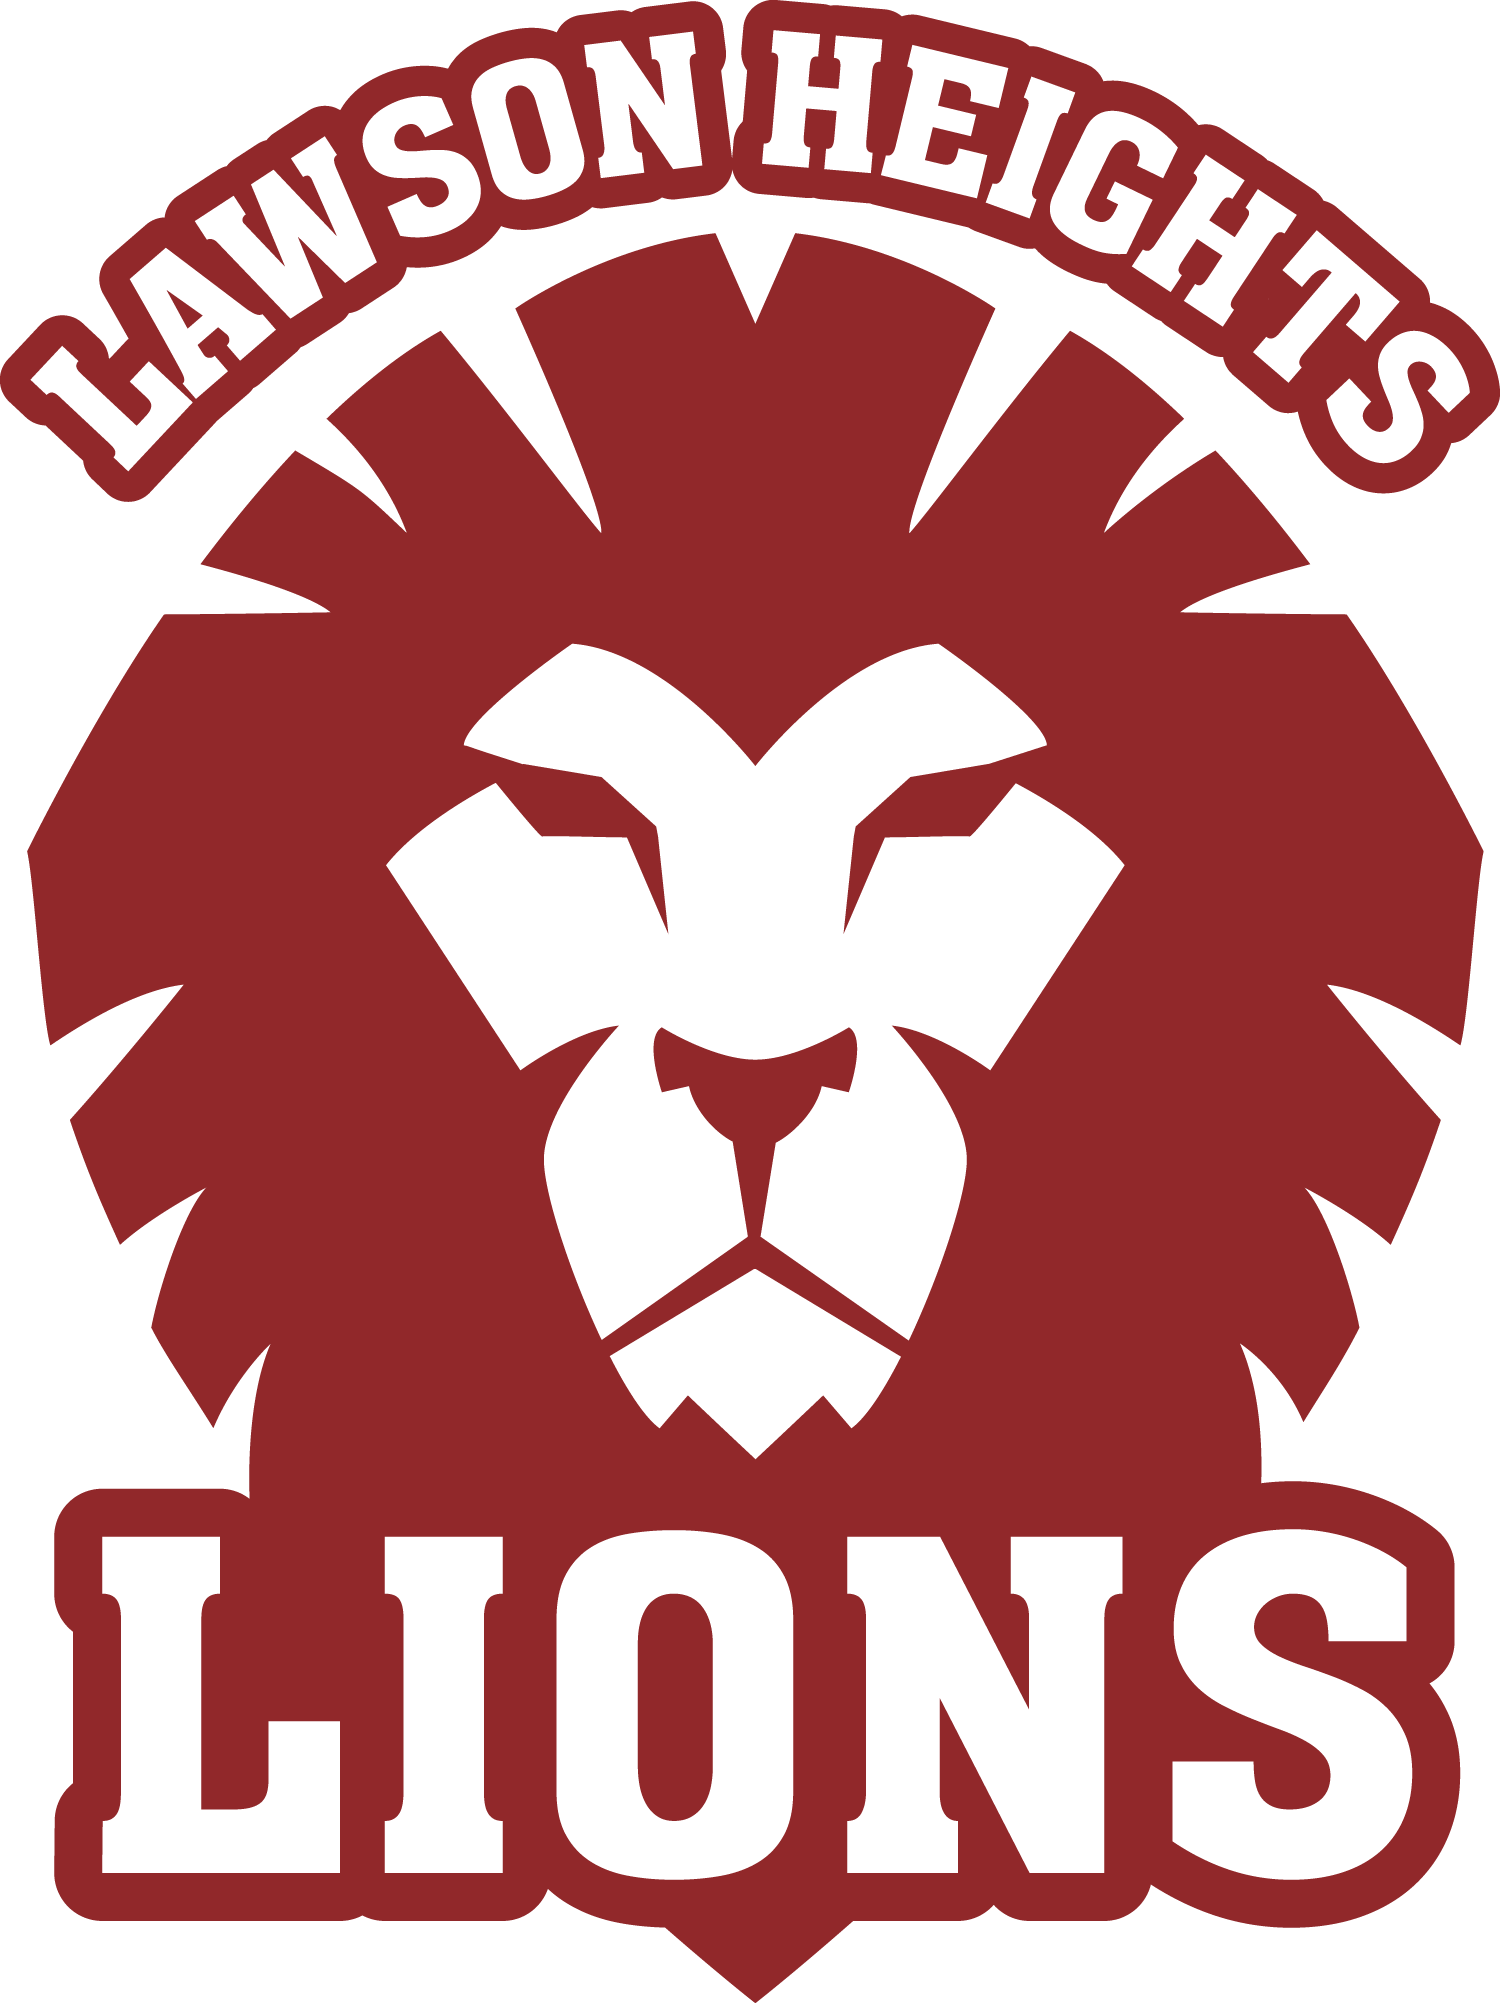 Lawson Logo - Lawson Heights School Heights School